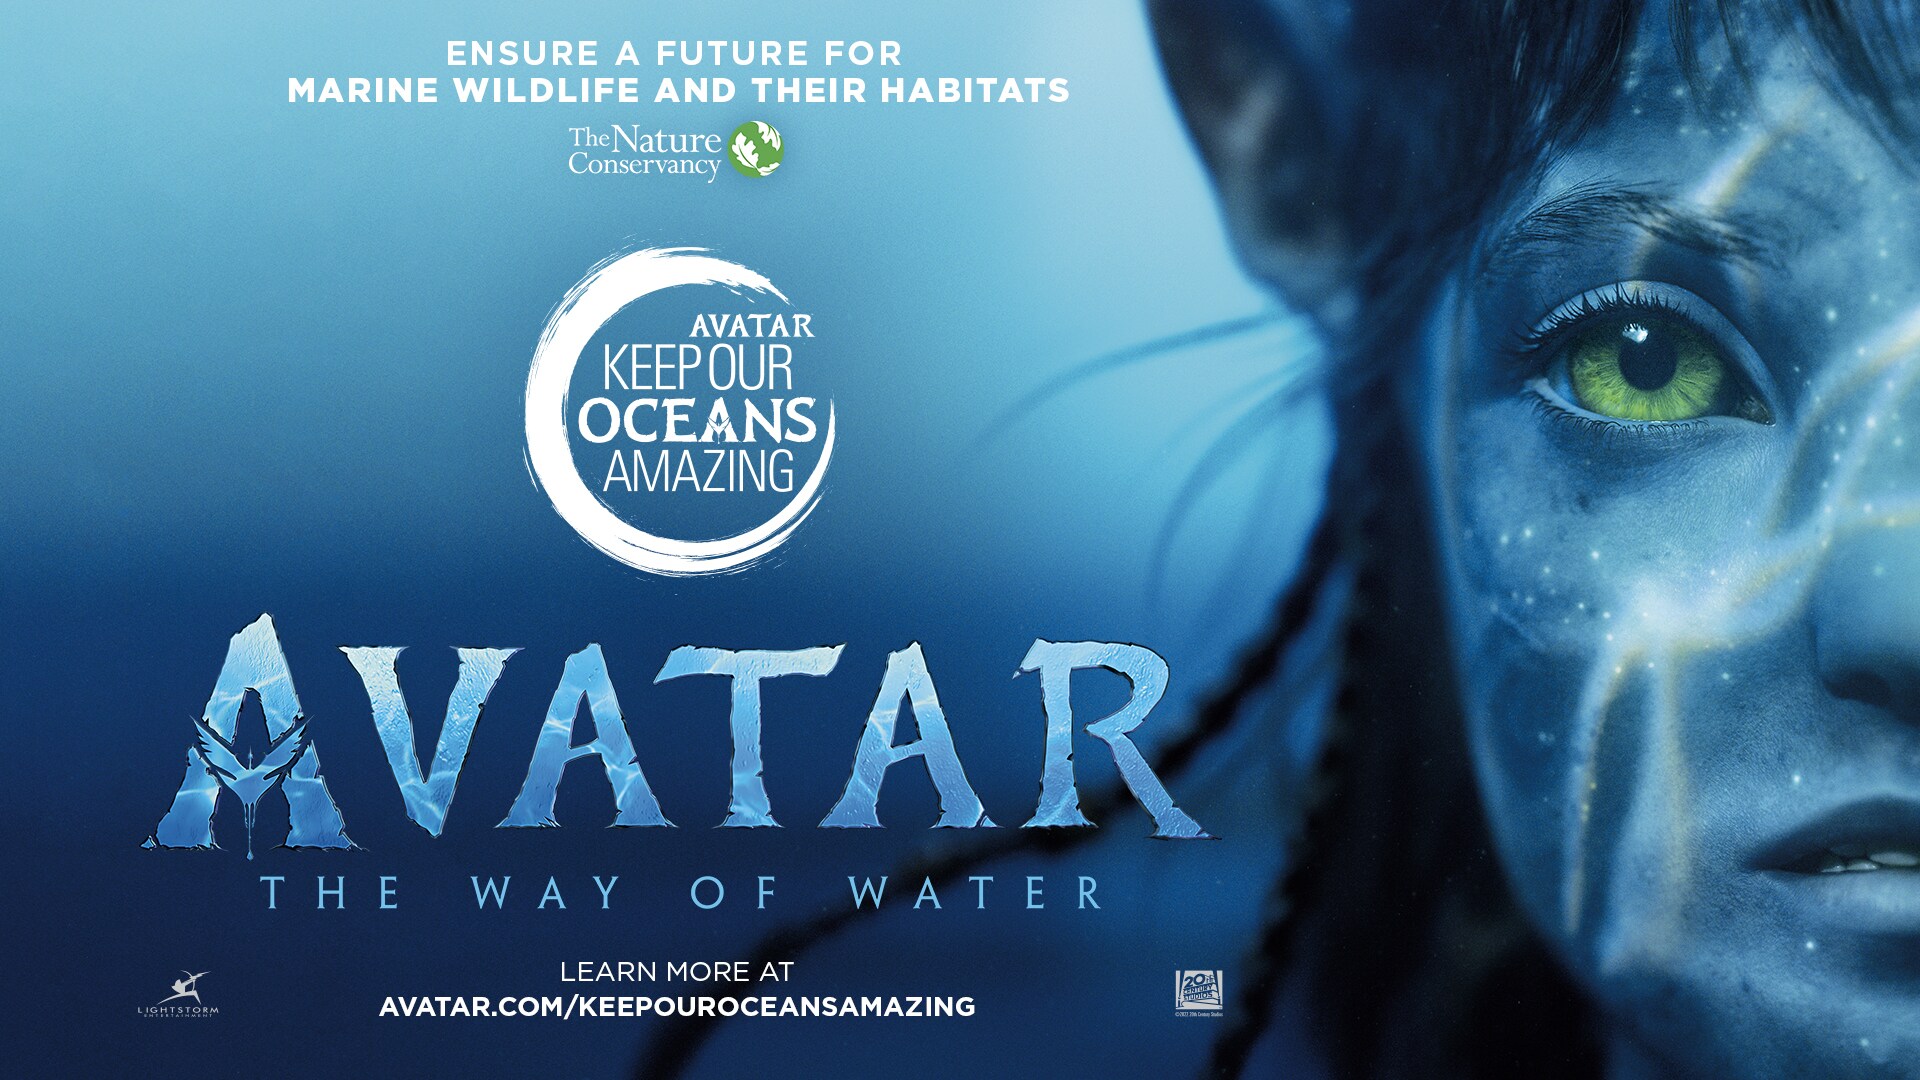 Avatarcom  The Official Avatar Website for Avatar News